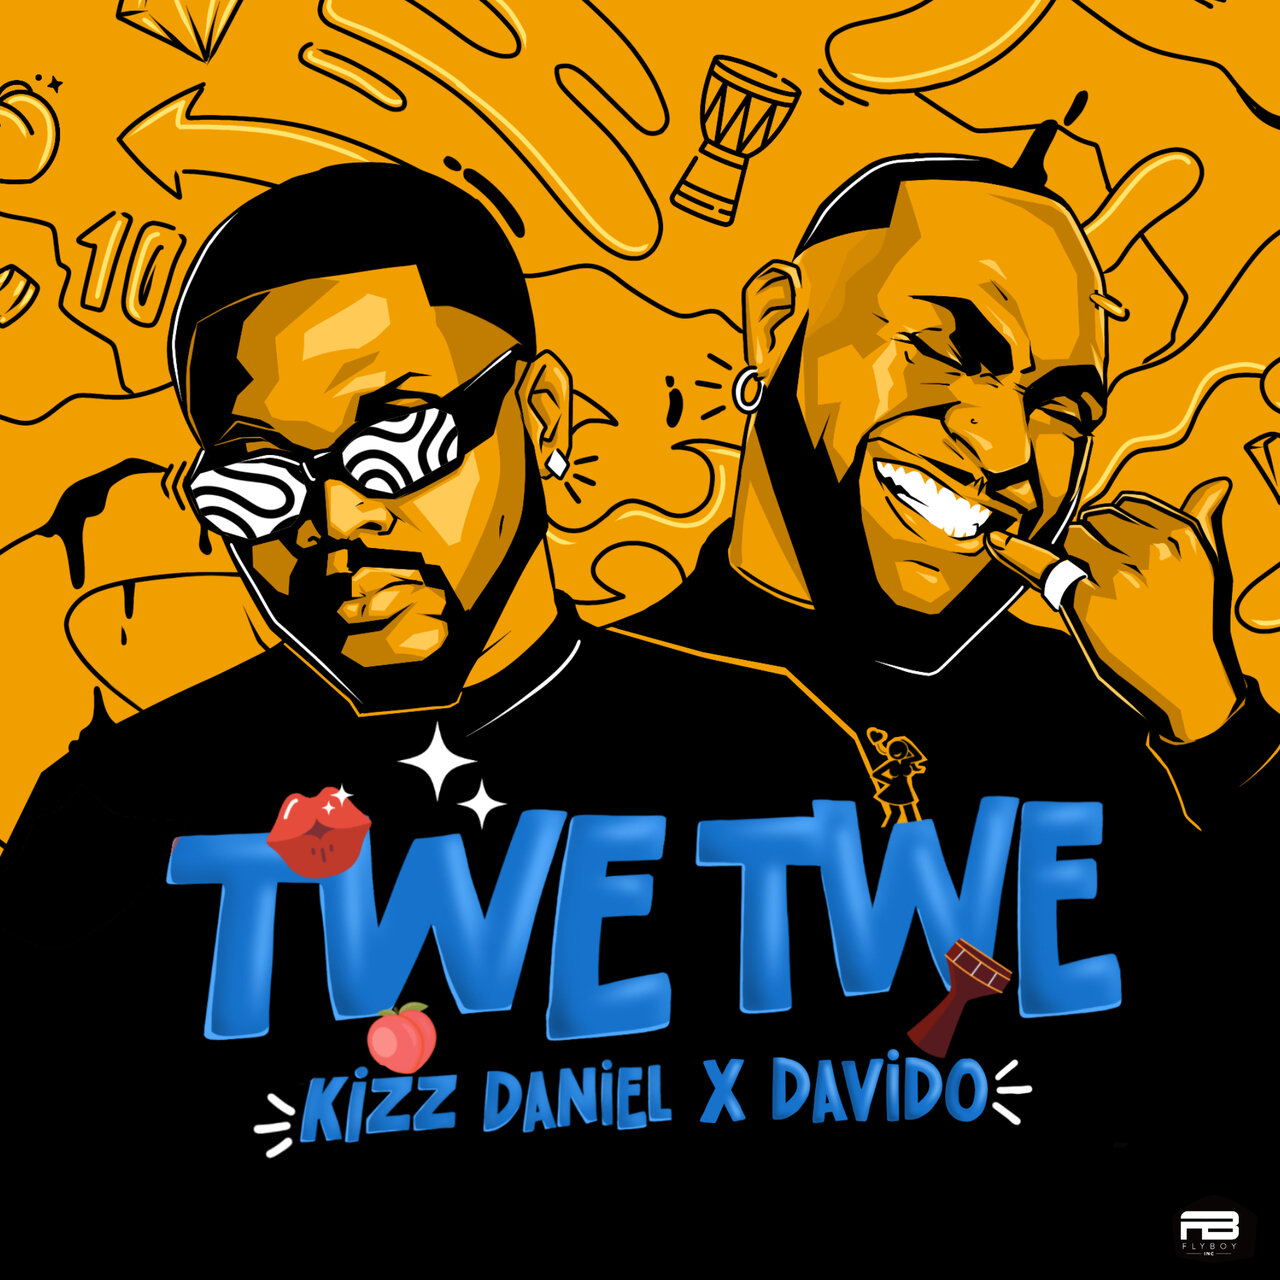 Kizz Daniel - Twe Twe (ft. Davido) (Cover)